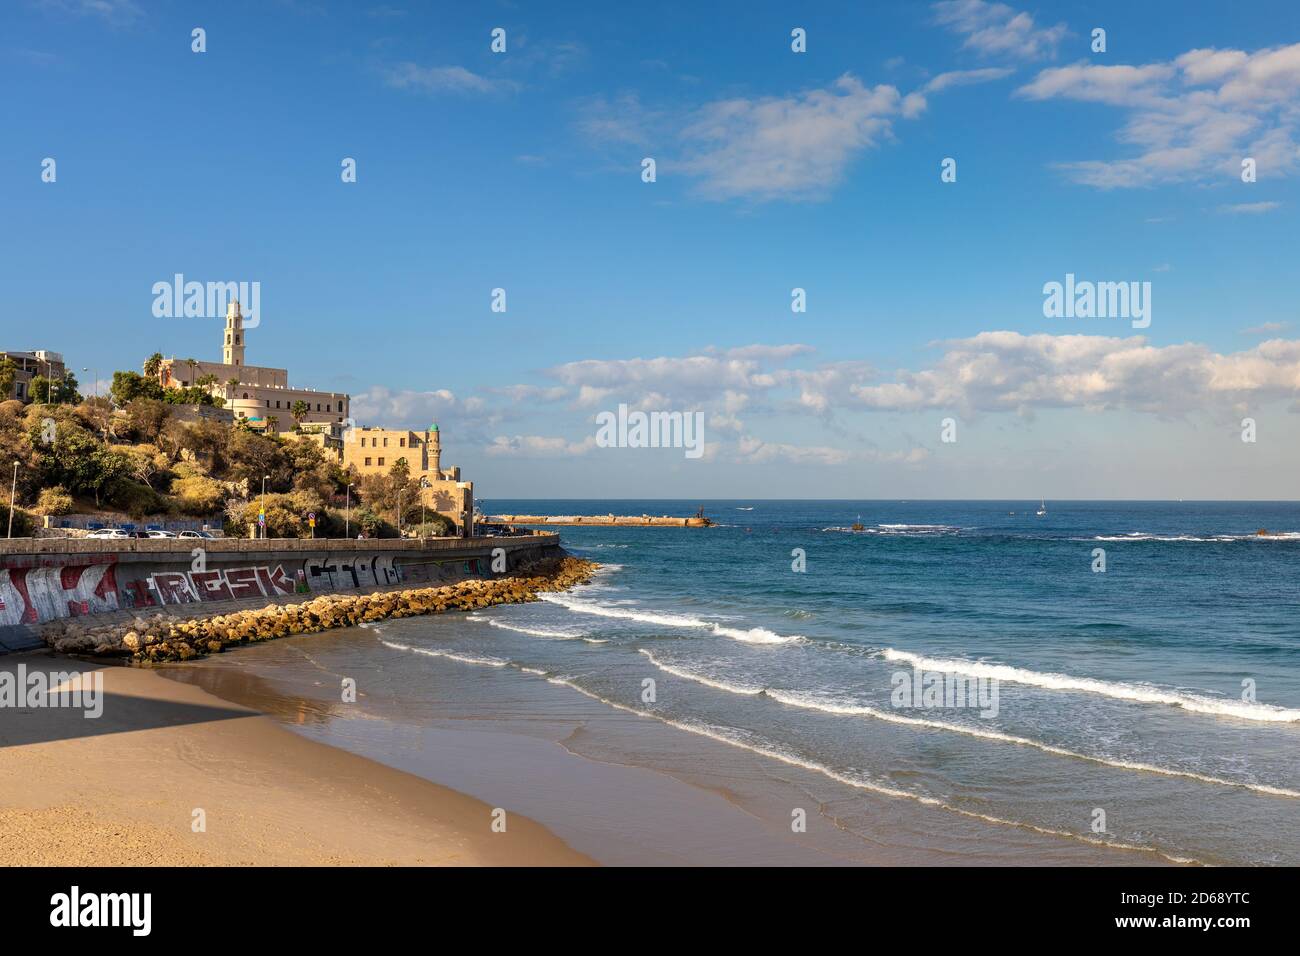 Tel Aviv Yafo, Gush Dan / Israel - 2017/10/11: Panoramablick auf die Altstadt von Jaffa an der Mittelmeerküste mit Meer Jaffa Strand Stockfoto